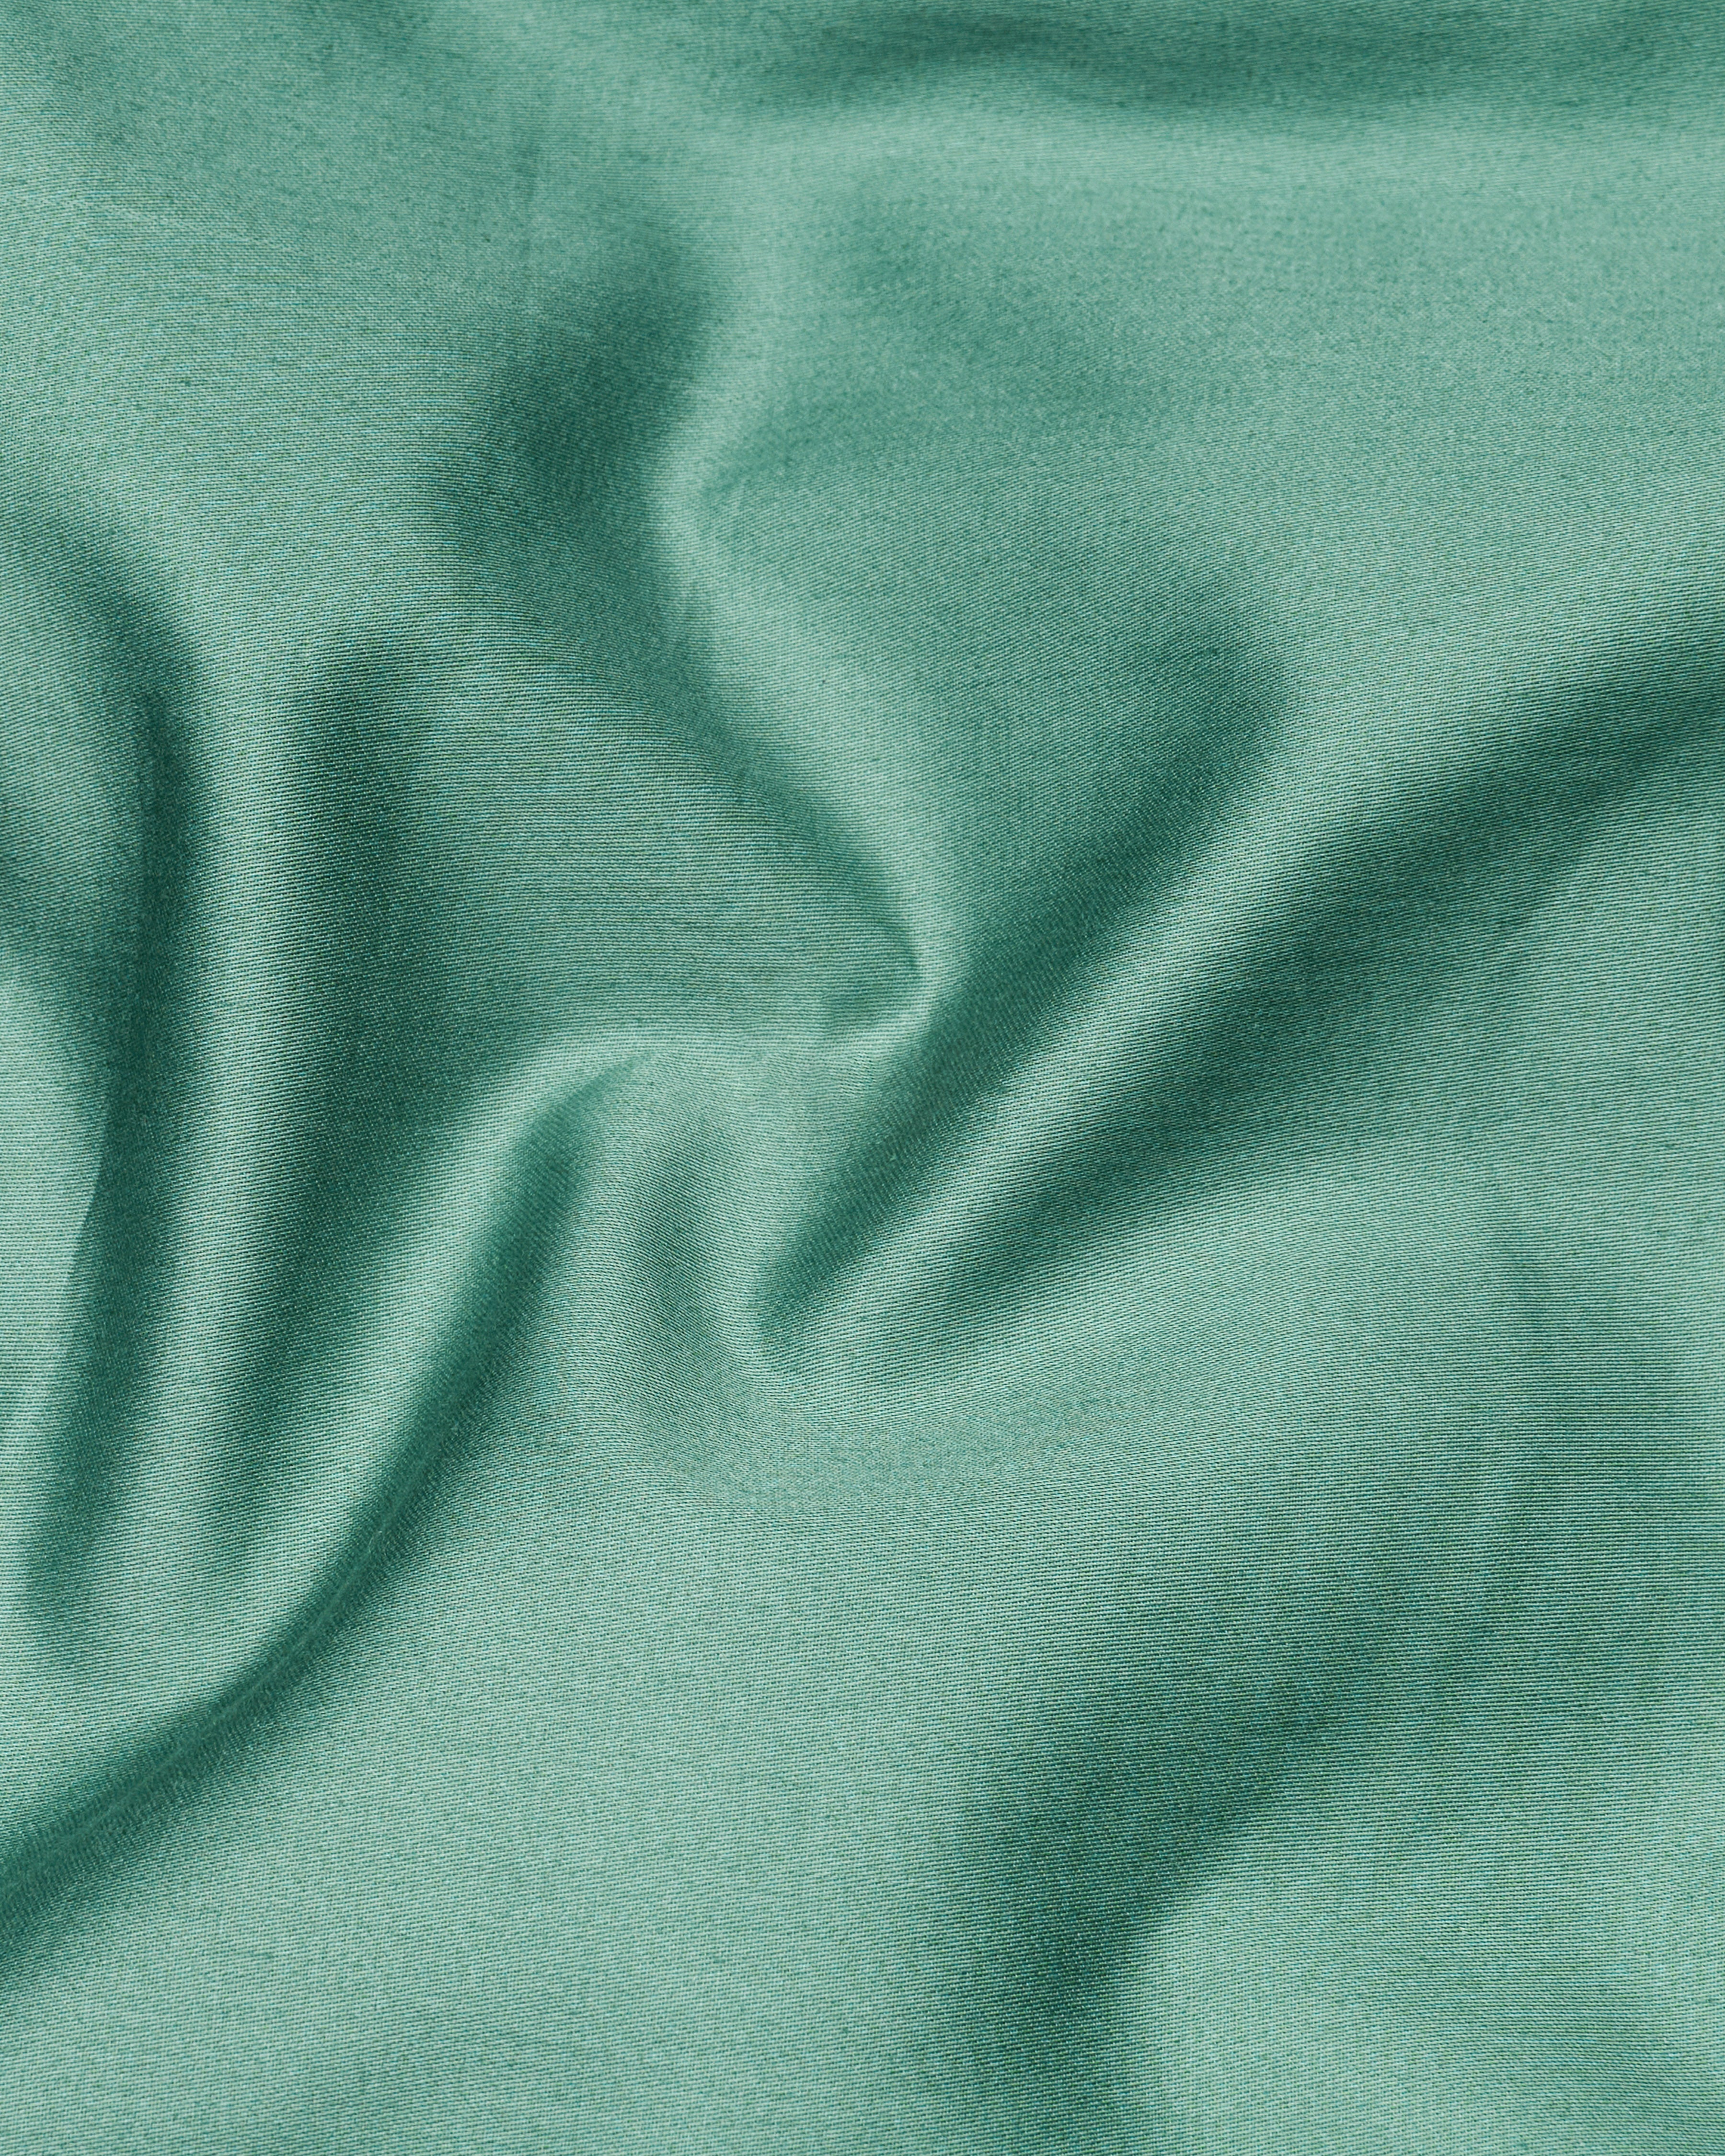 Patina Green Snake Pleated Super Soft Premium Cotton Tuxedo Shirt  8680-BLK-TXD-38,8680-BLK-TXD-H-38,8680-BLK-TXD-39,8680-BLK-TXD-H-39,8680-BLK-TXD-40,8680-BLK-TXD-H-40,8680-BLK-TXD-42,8680-BLK-TXD-H-42,8680-BLK-TXD-44,8680-BLK-TXD-H-44,8680-BLK-TXD-46,8680-BLK-TXD-H-46,8680-BLK-TXD-48,8680-BLK-TXD-H-48,8680-BLK-TXD-50,8680-BLK-TXD-H-50,8680-BLK-TXD-52,8680-BLK-TXD-H-52